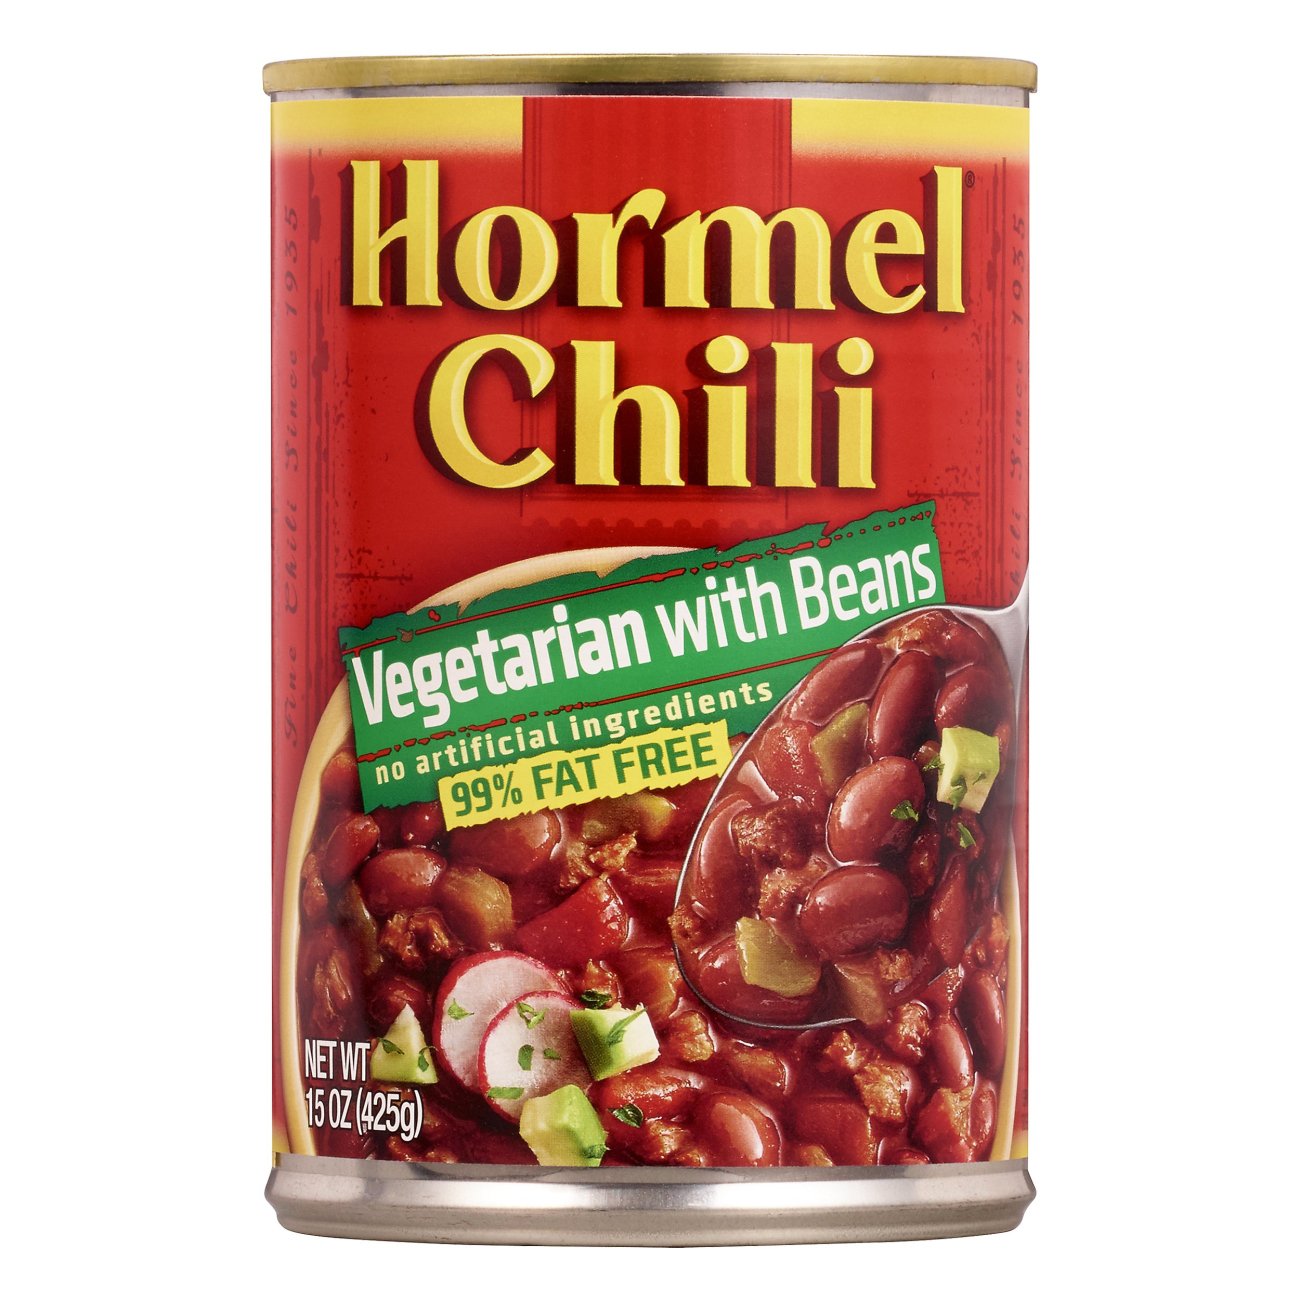 Hormel 99 Fat Free Vegetarian Chili